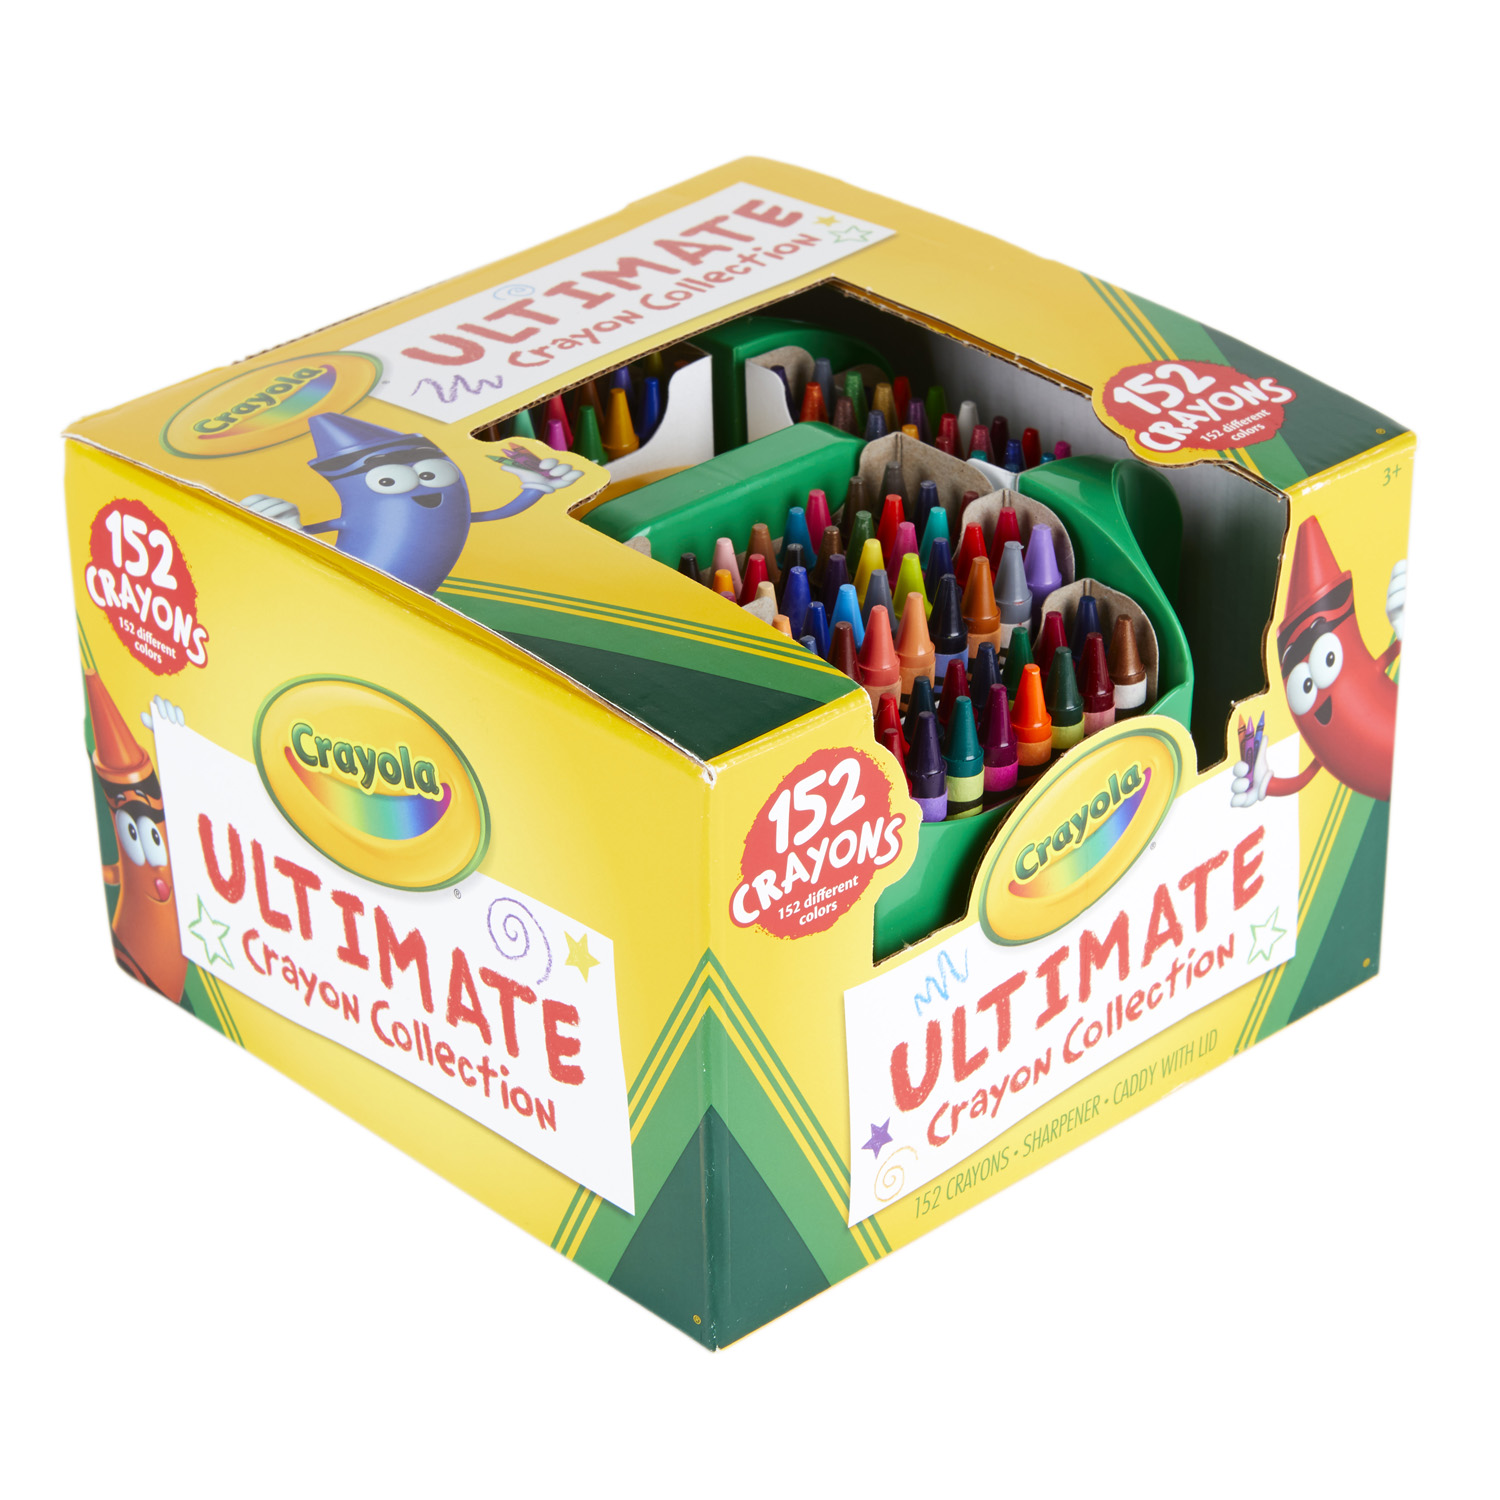 Crayola Classroom Set Crayons, Teacher Supplies, 240 Count #34542 –